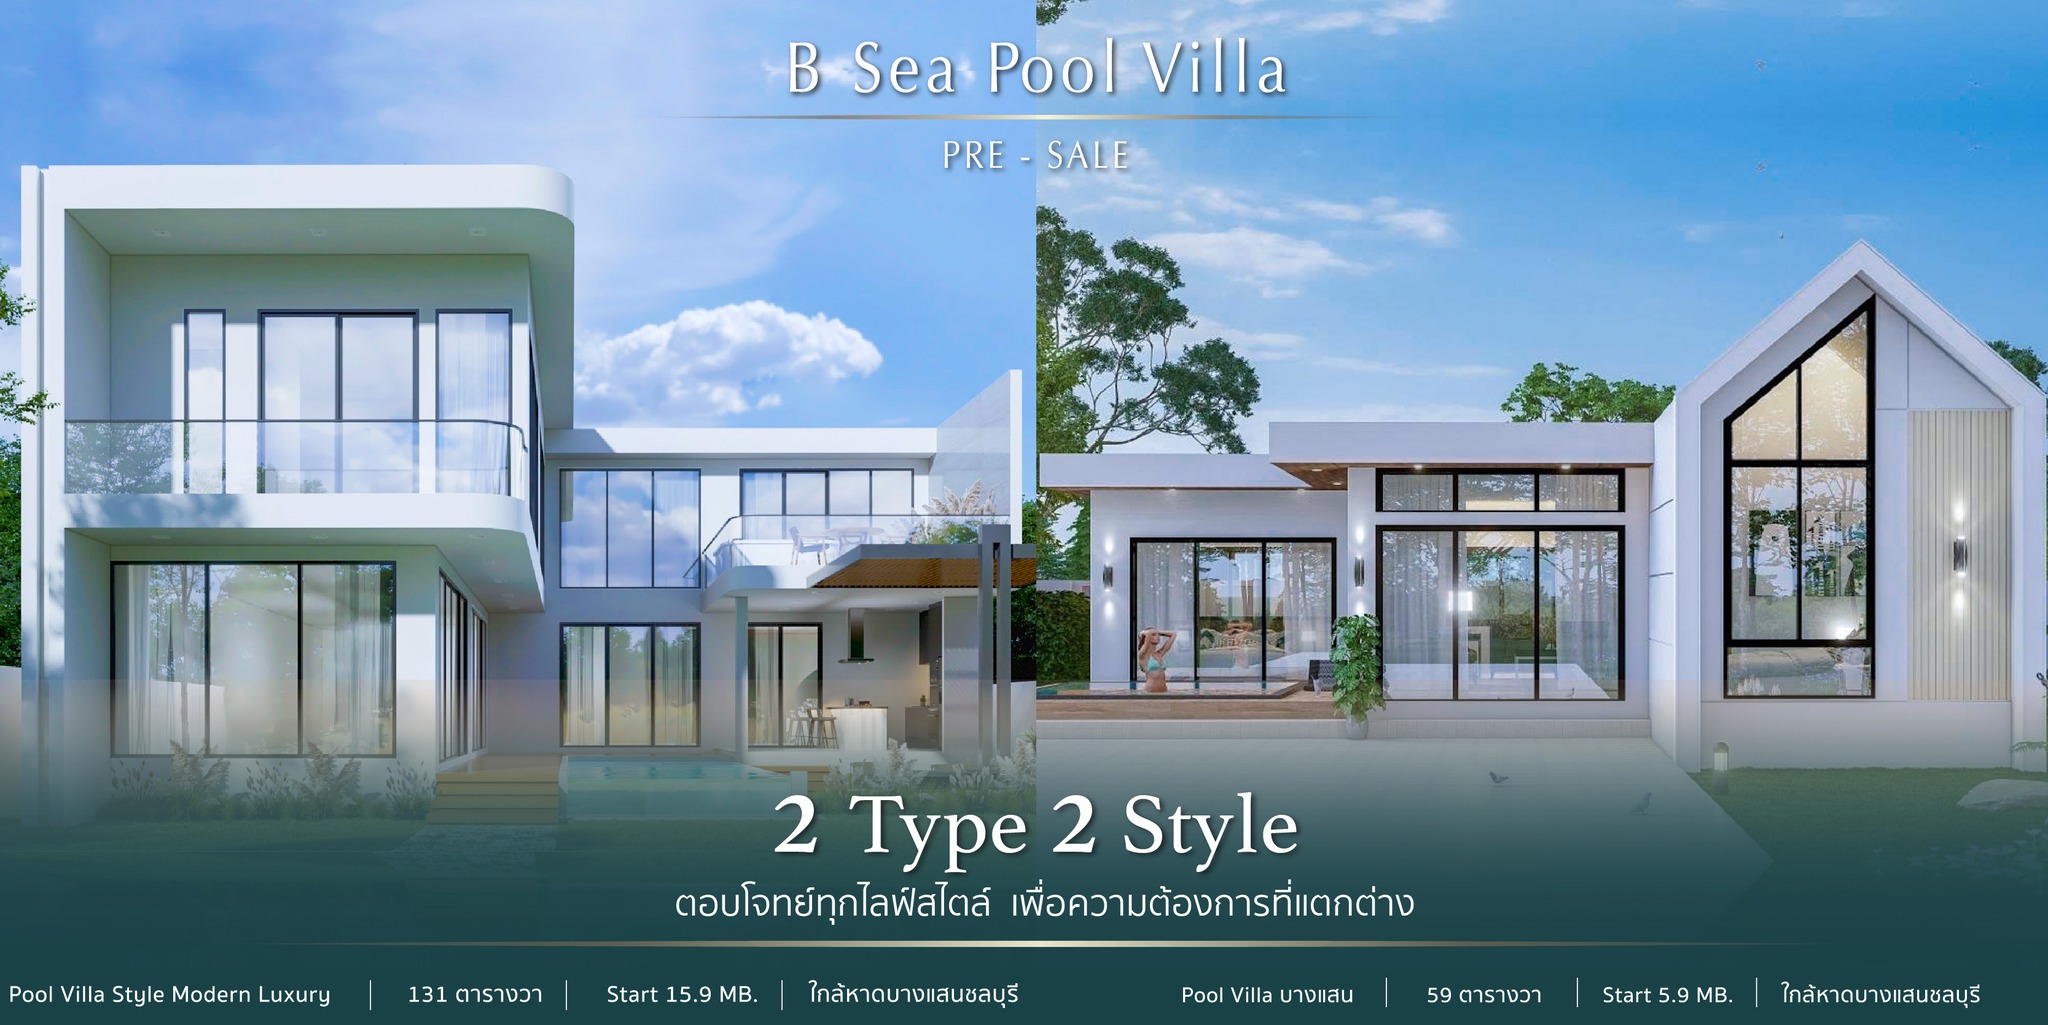 B Sea Pool Villa Bangsaen. 3 bedrooms Pool Villa for investment!!️ Starting price 5.9m baht